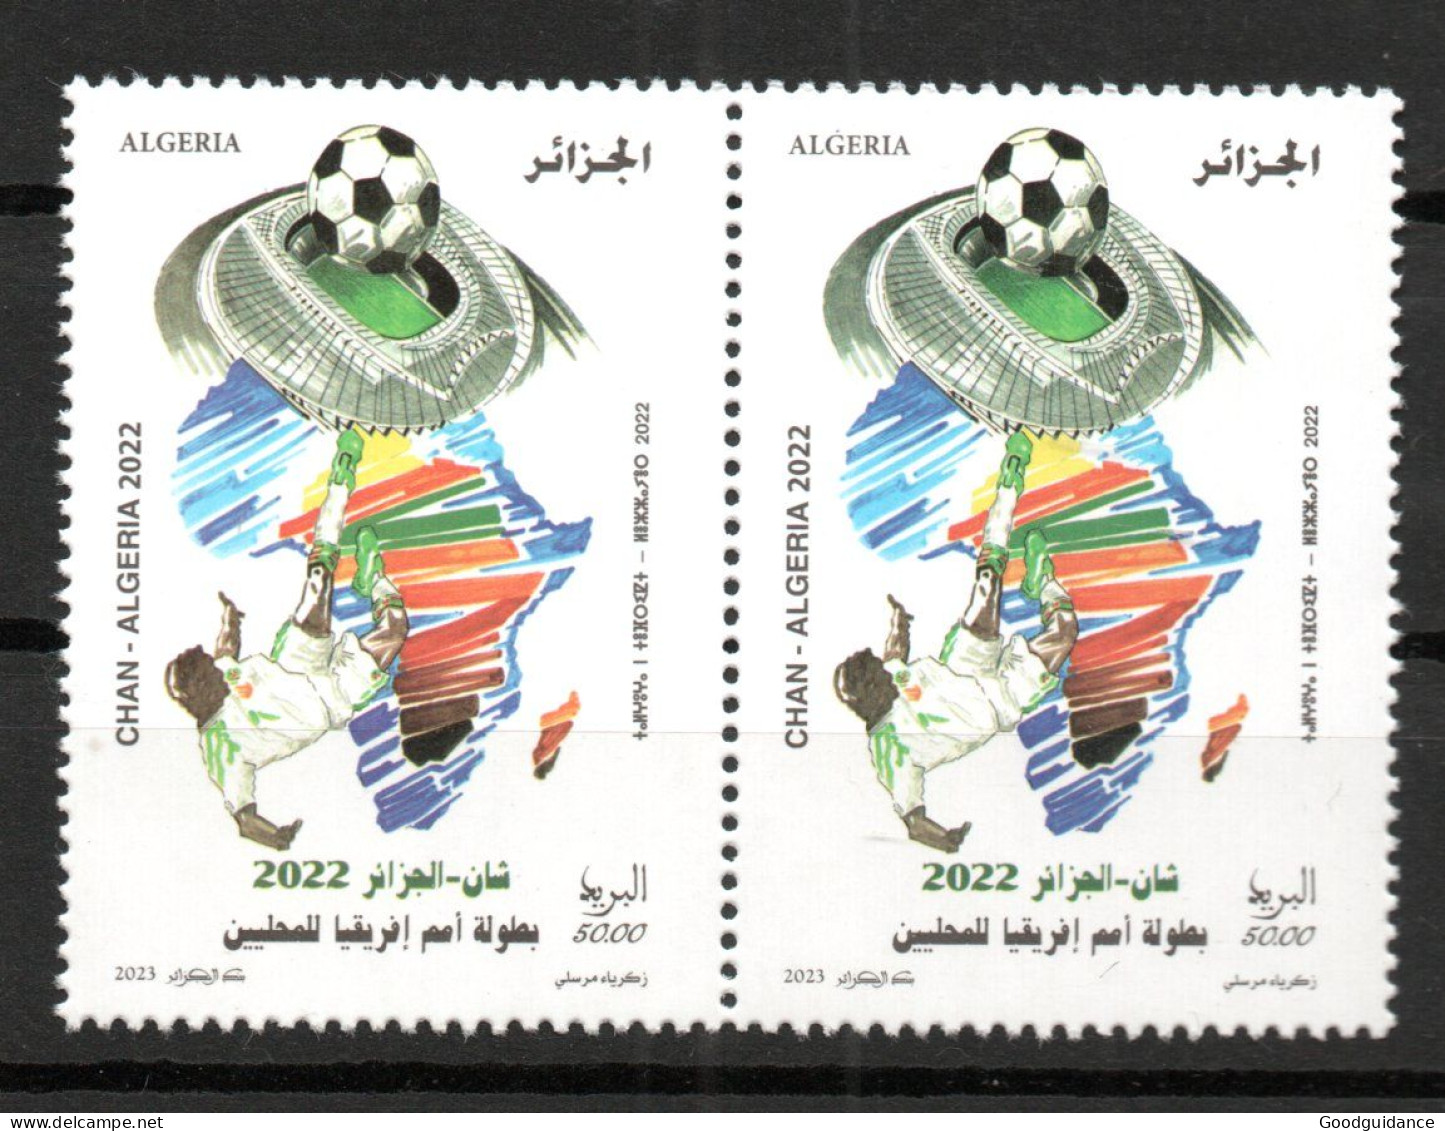 2023 - Algeria - The 7th Africa Cup Of Nations Football Championships 2022- Soccer- Stadium - Map - Pair- Set 1v.MNH** - Copa Africana De Naciones